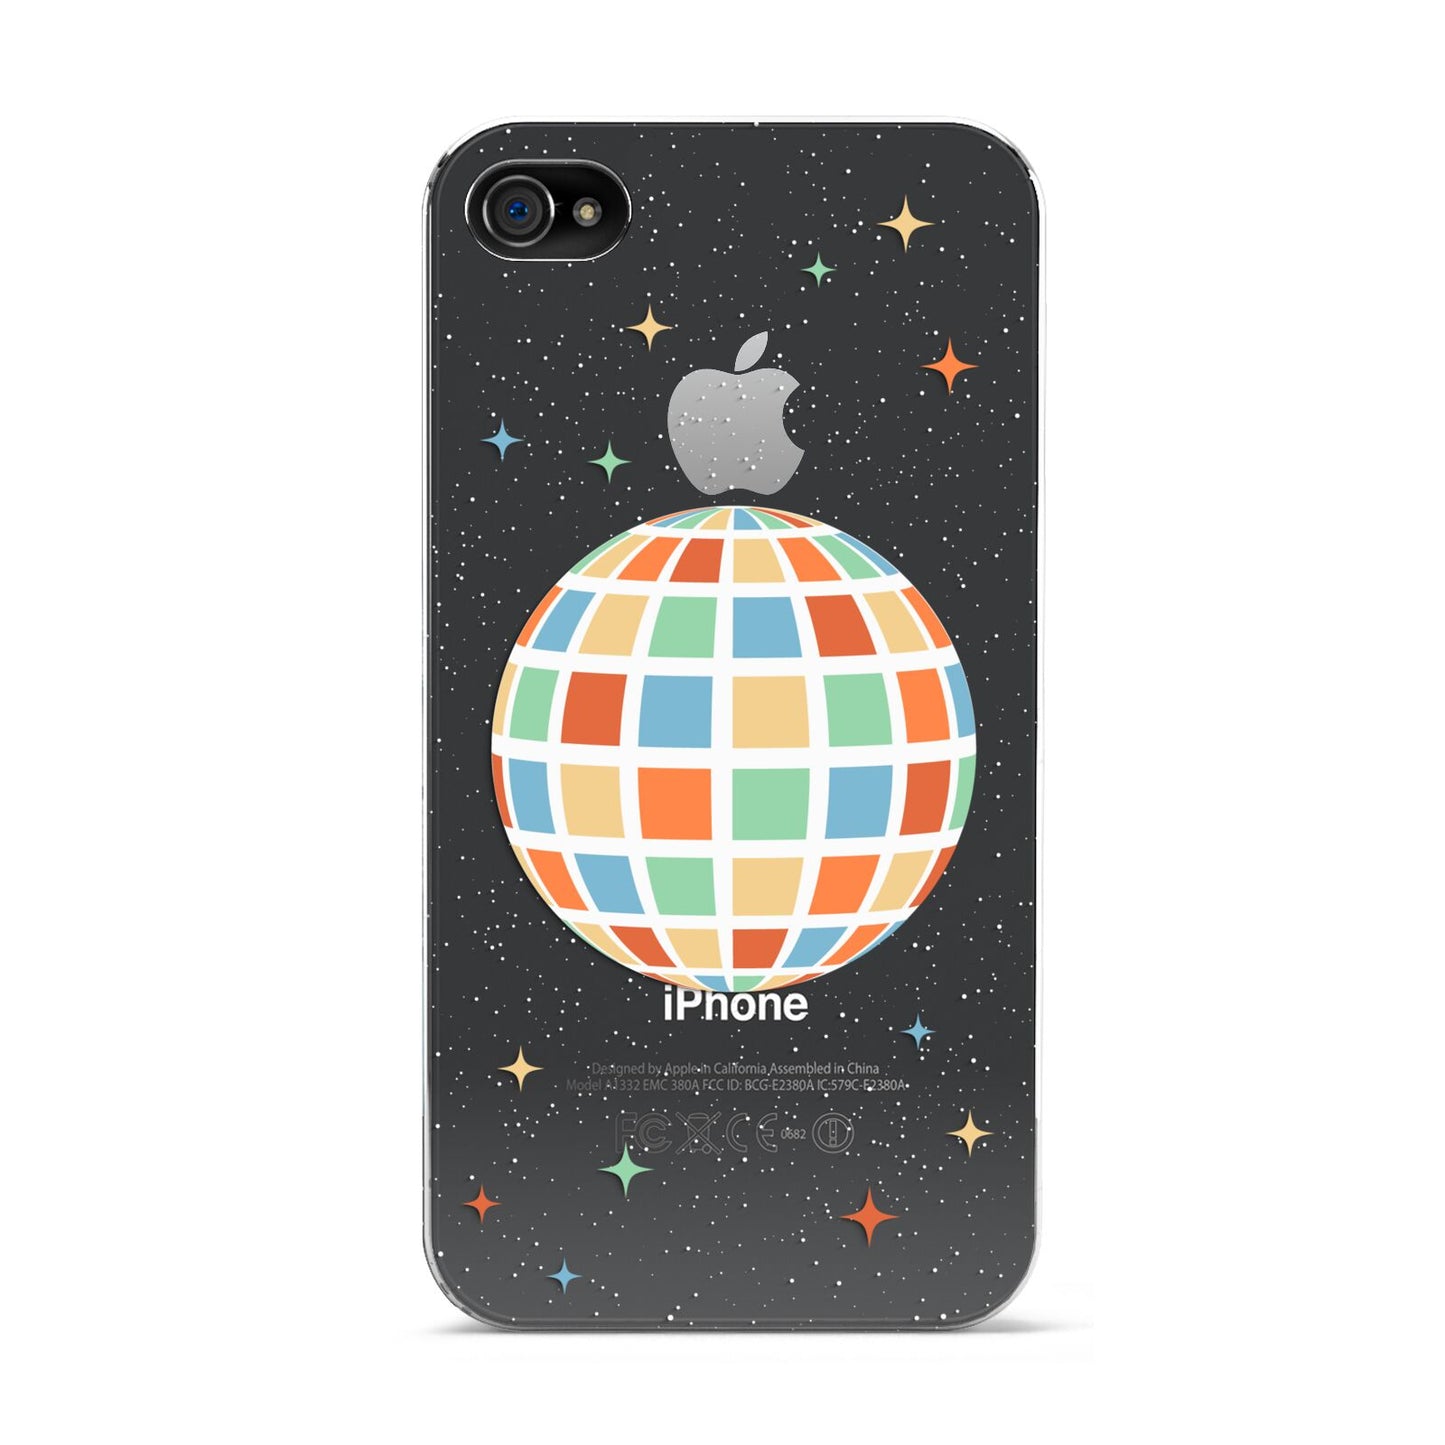 Disco Ball Apple iPhone 4s Case